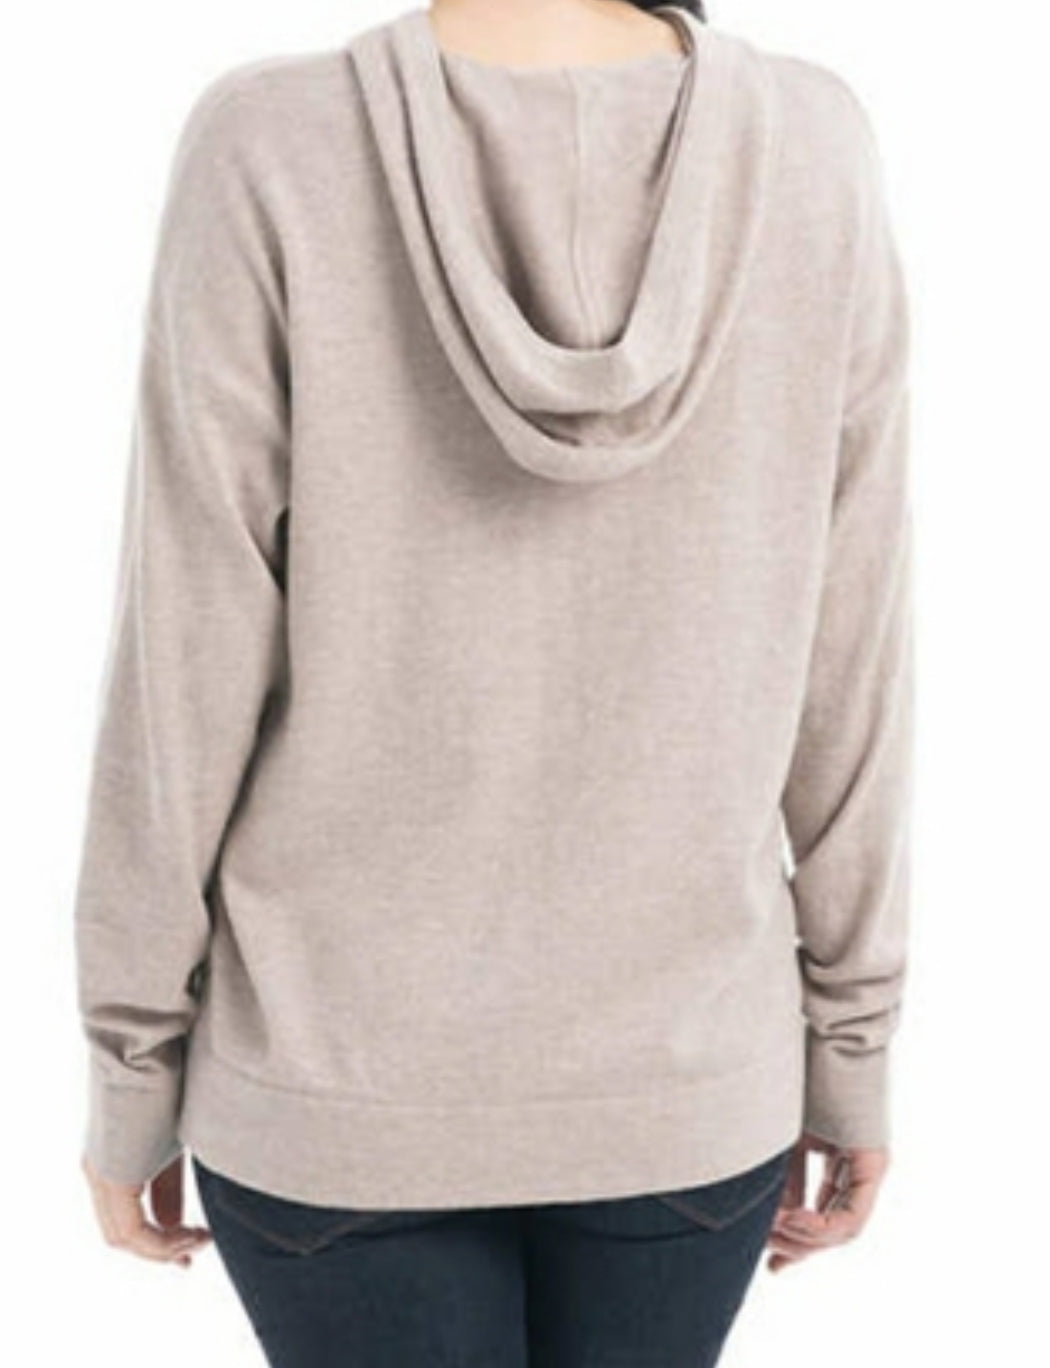 Hilary Radley Womens Cozy Sweater Hoodie